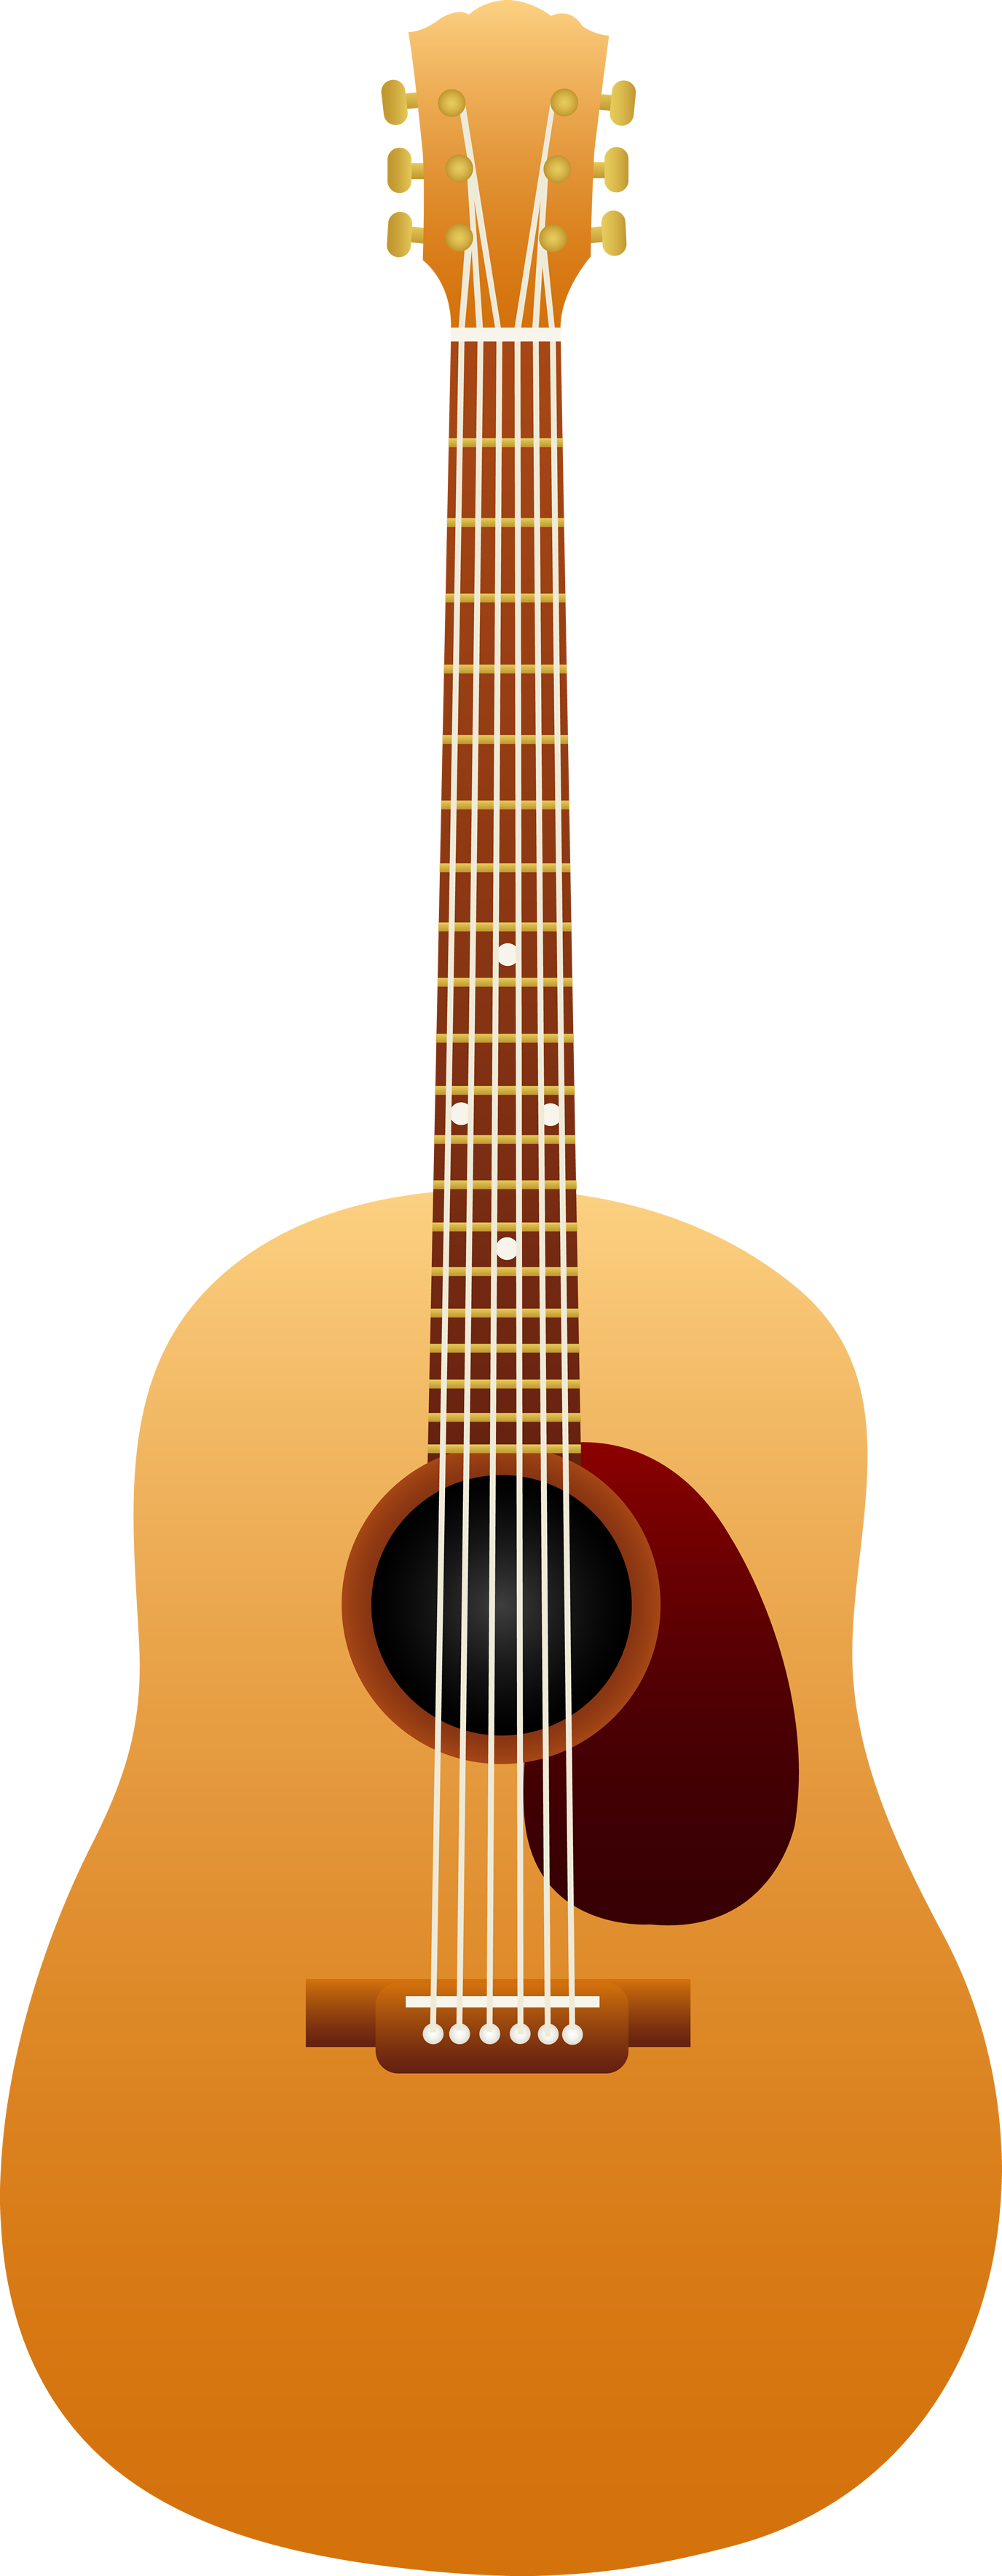 Brown Guitar Transparent Background